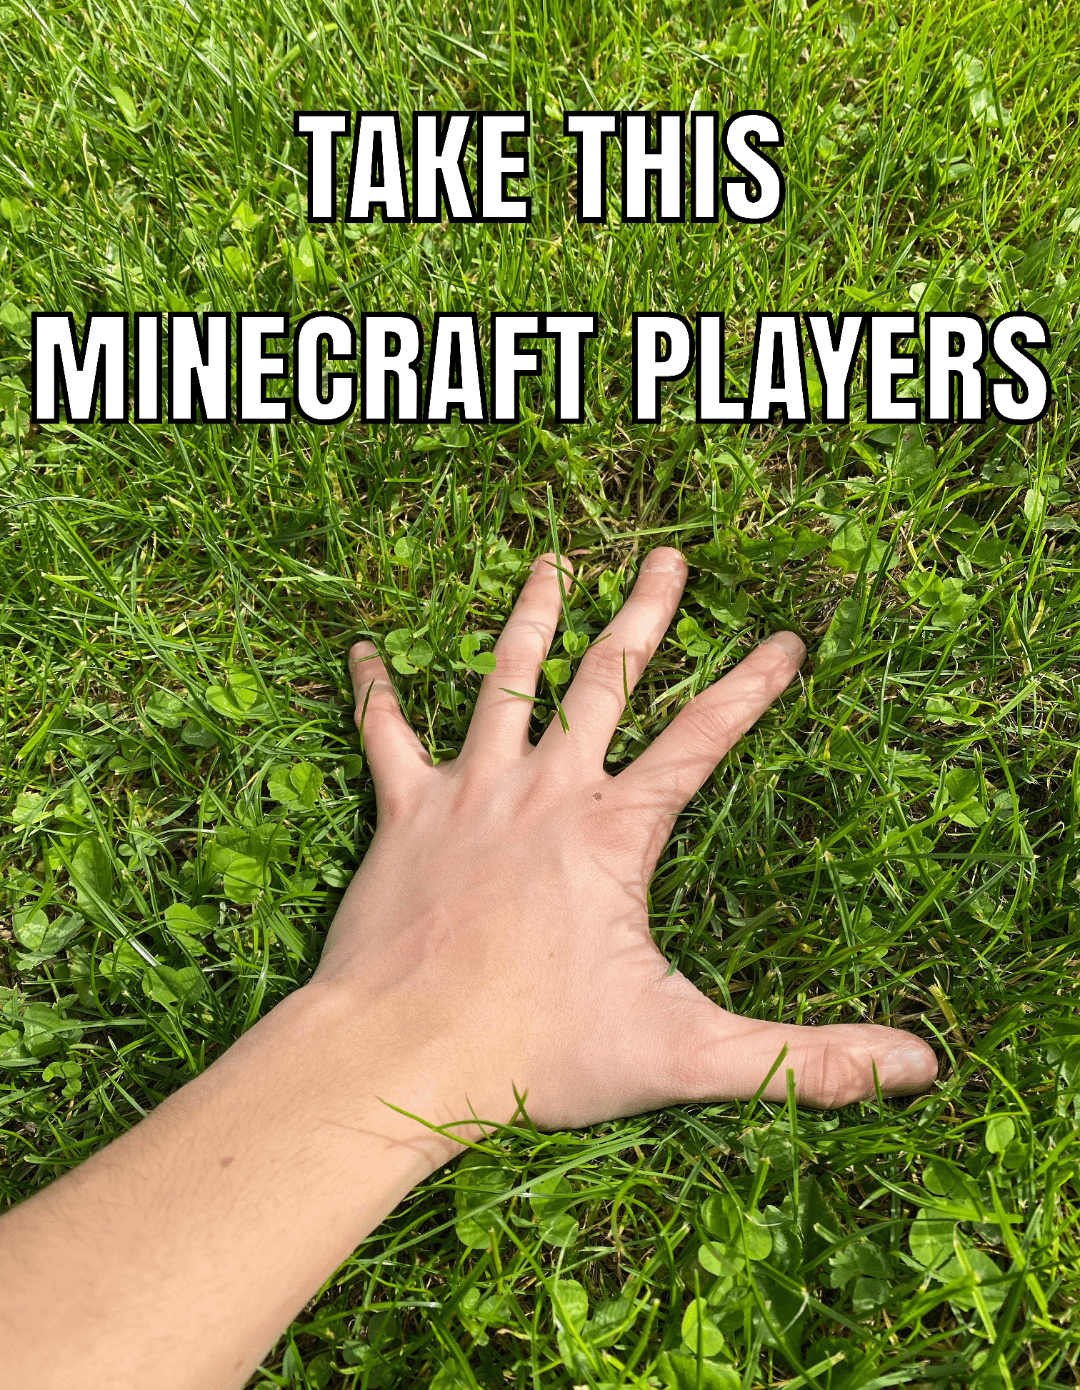 Minecraft Memes - "Take this, creeper!"